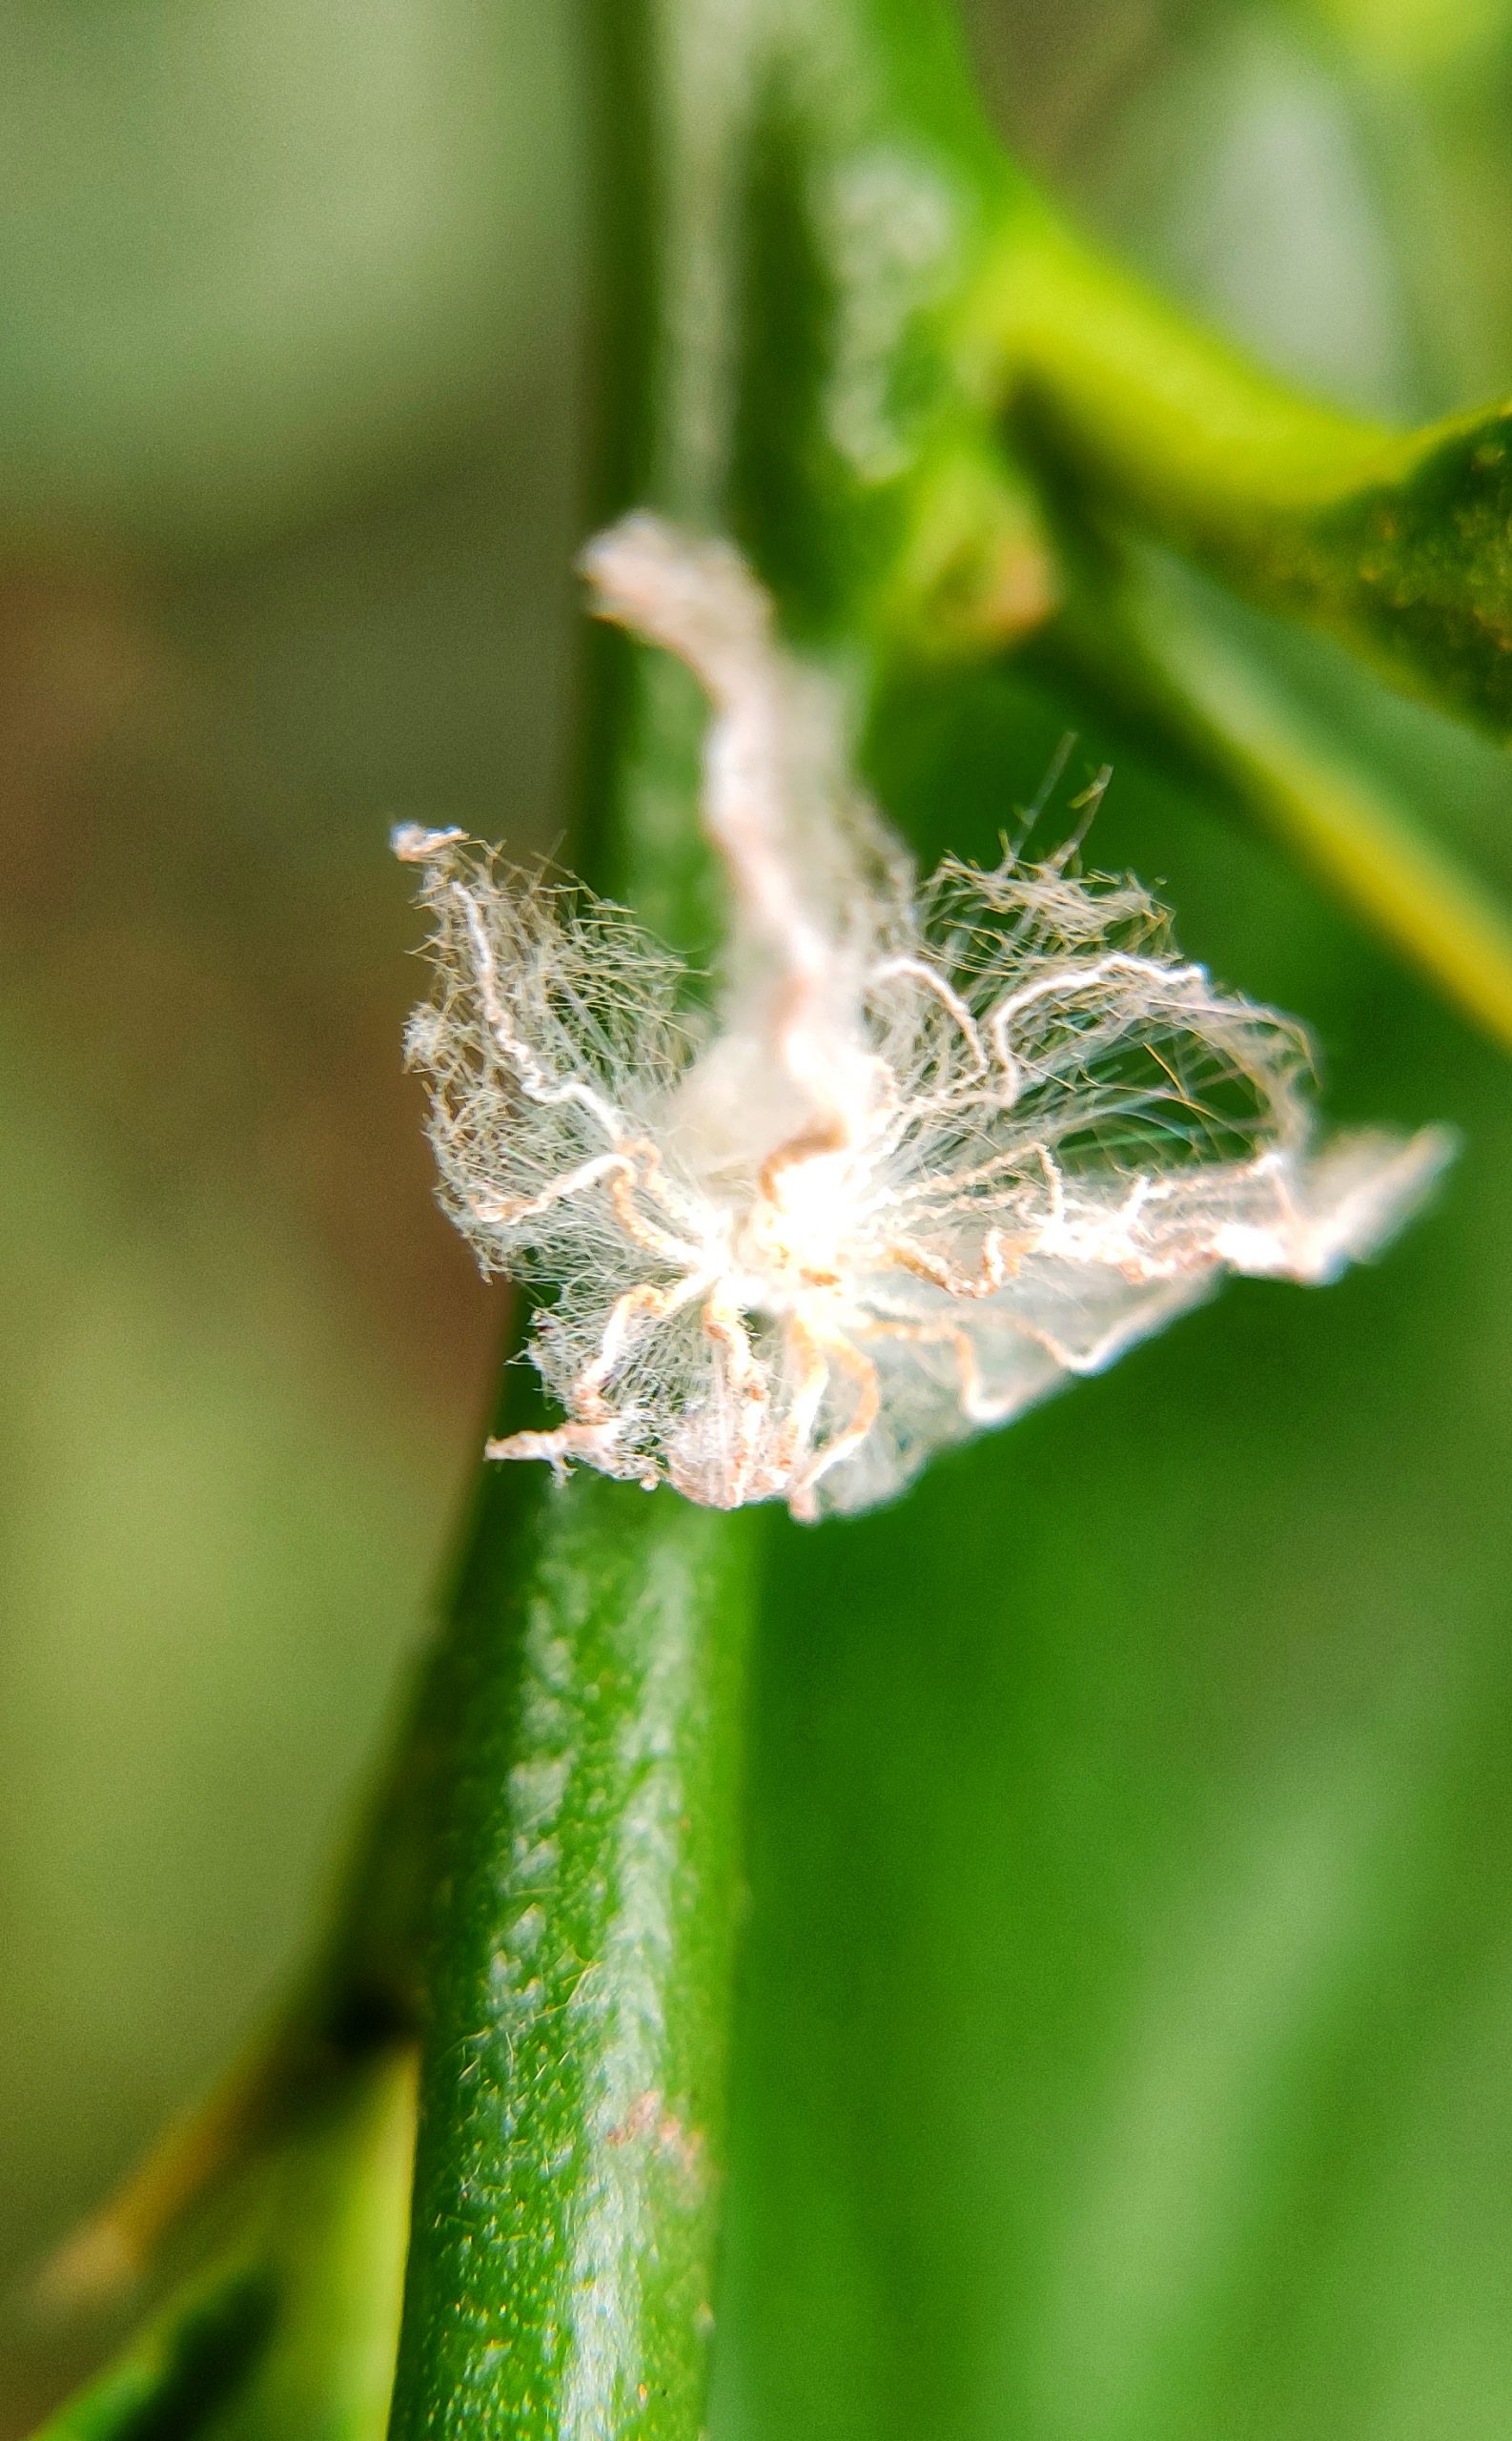 White creature on plant stem